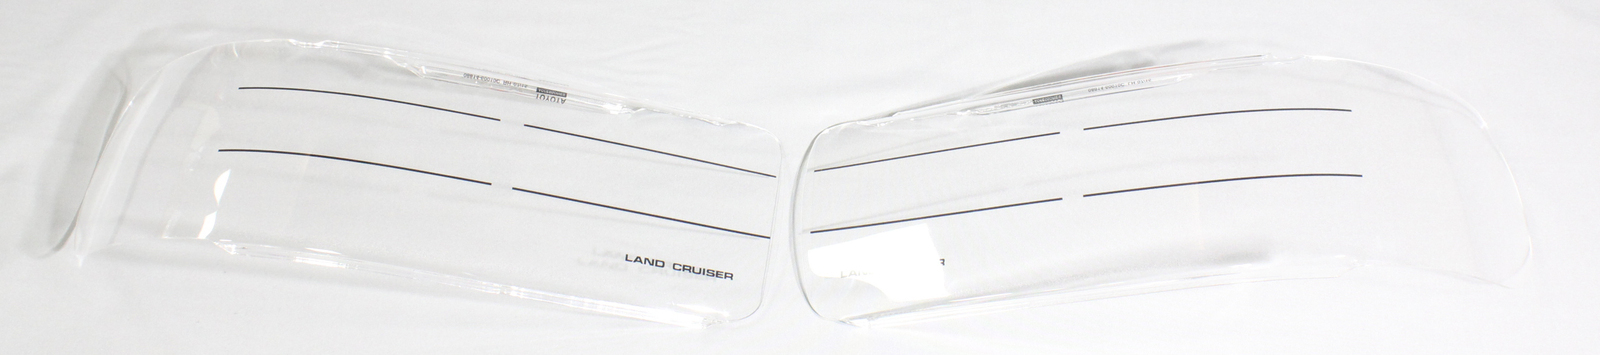 HEADLAMP gxl HEADLIGHT  COVERS x 2 suit Landcruiser 80 SERIES standard